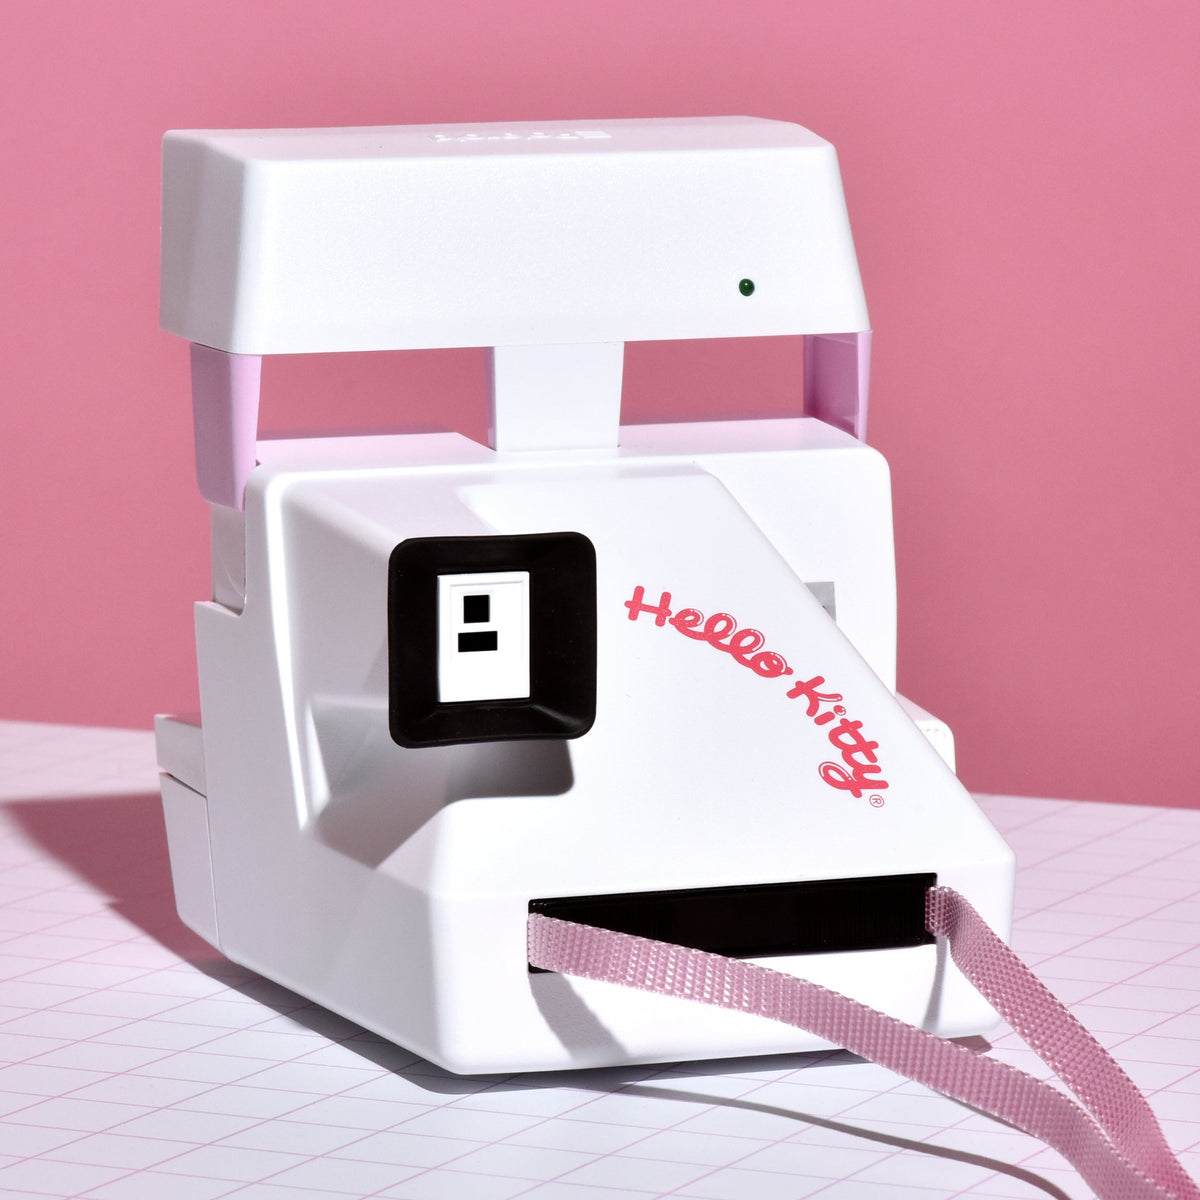 Hello Kitty x Polaroid 600 Strawberry Milk Instant Film Camera Electronic RETROSPEKT   